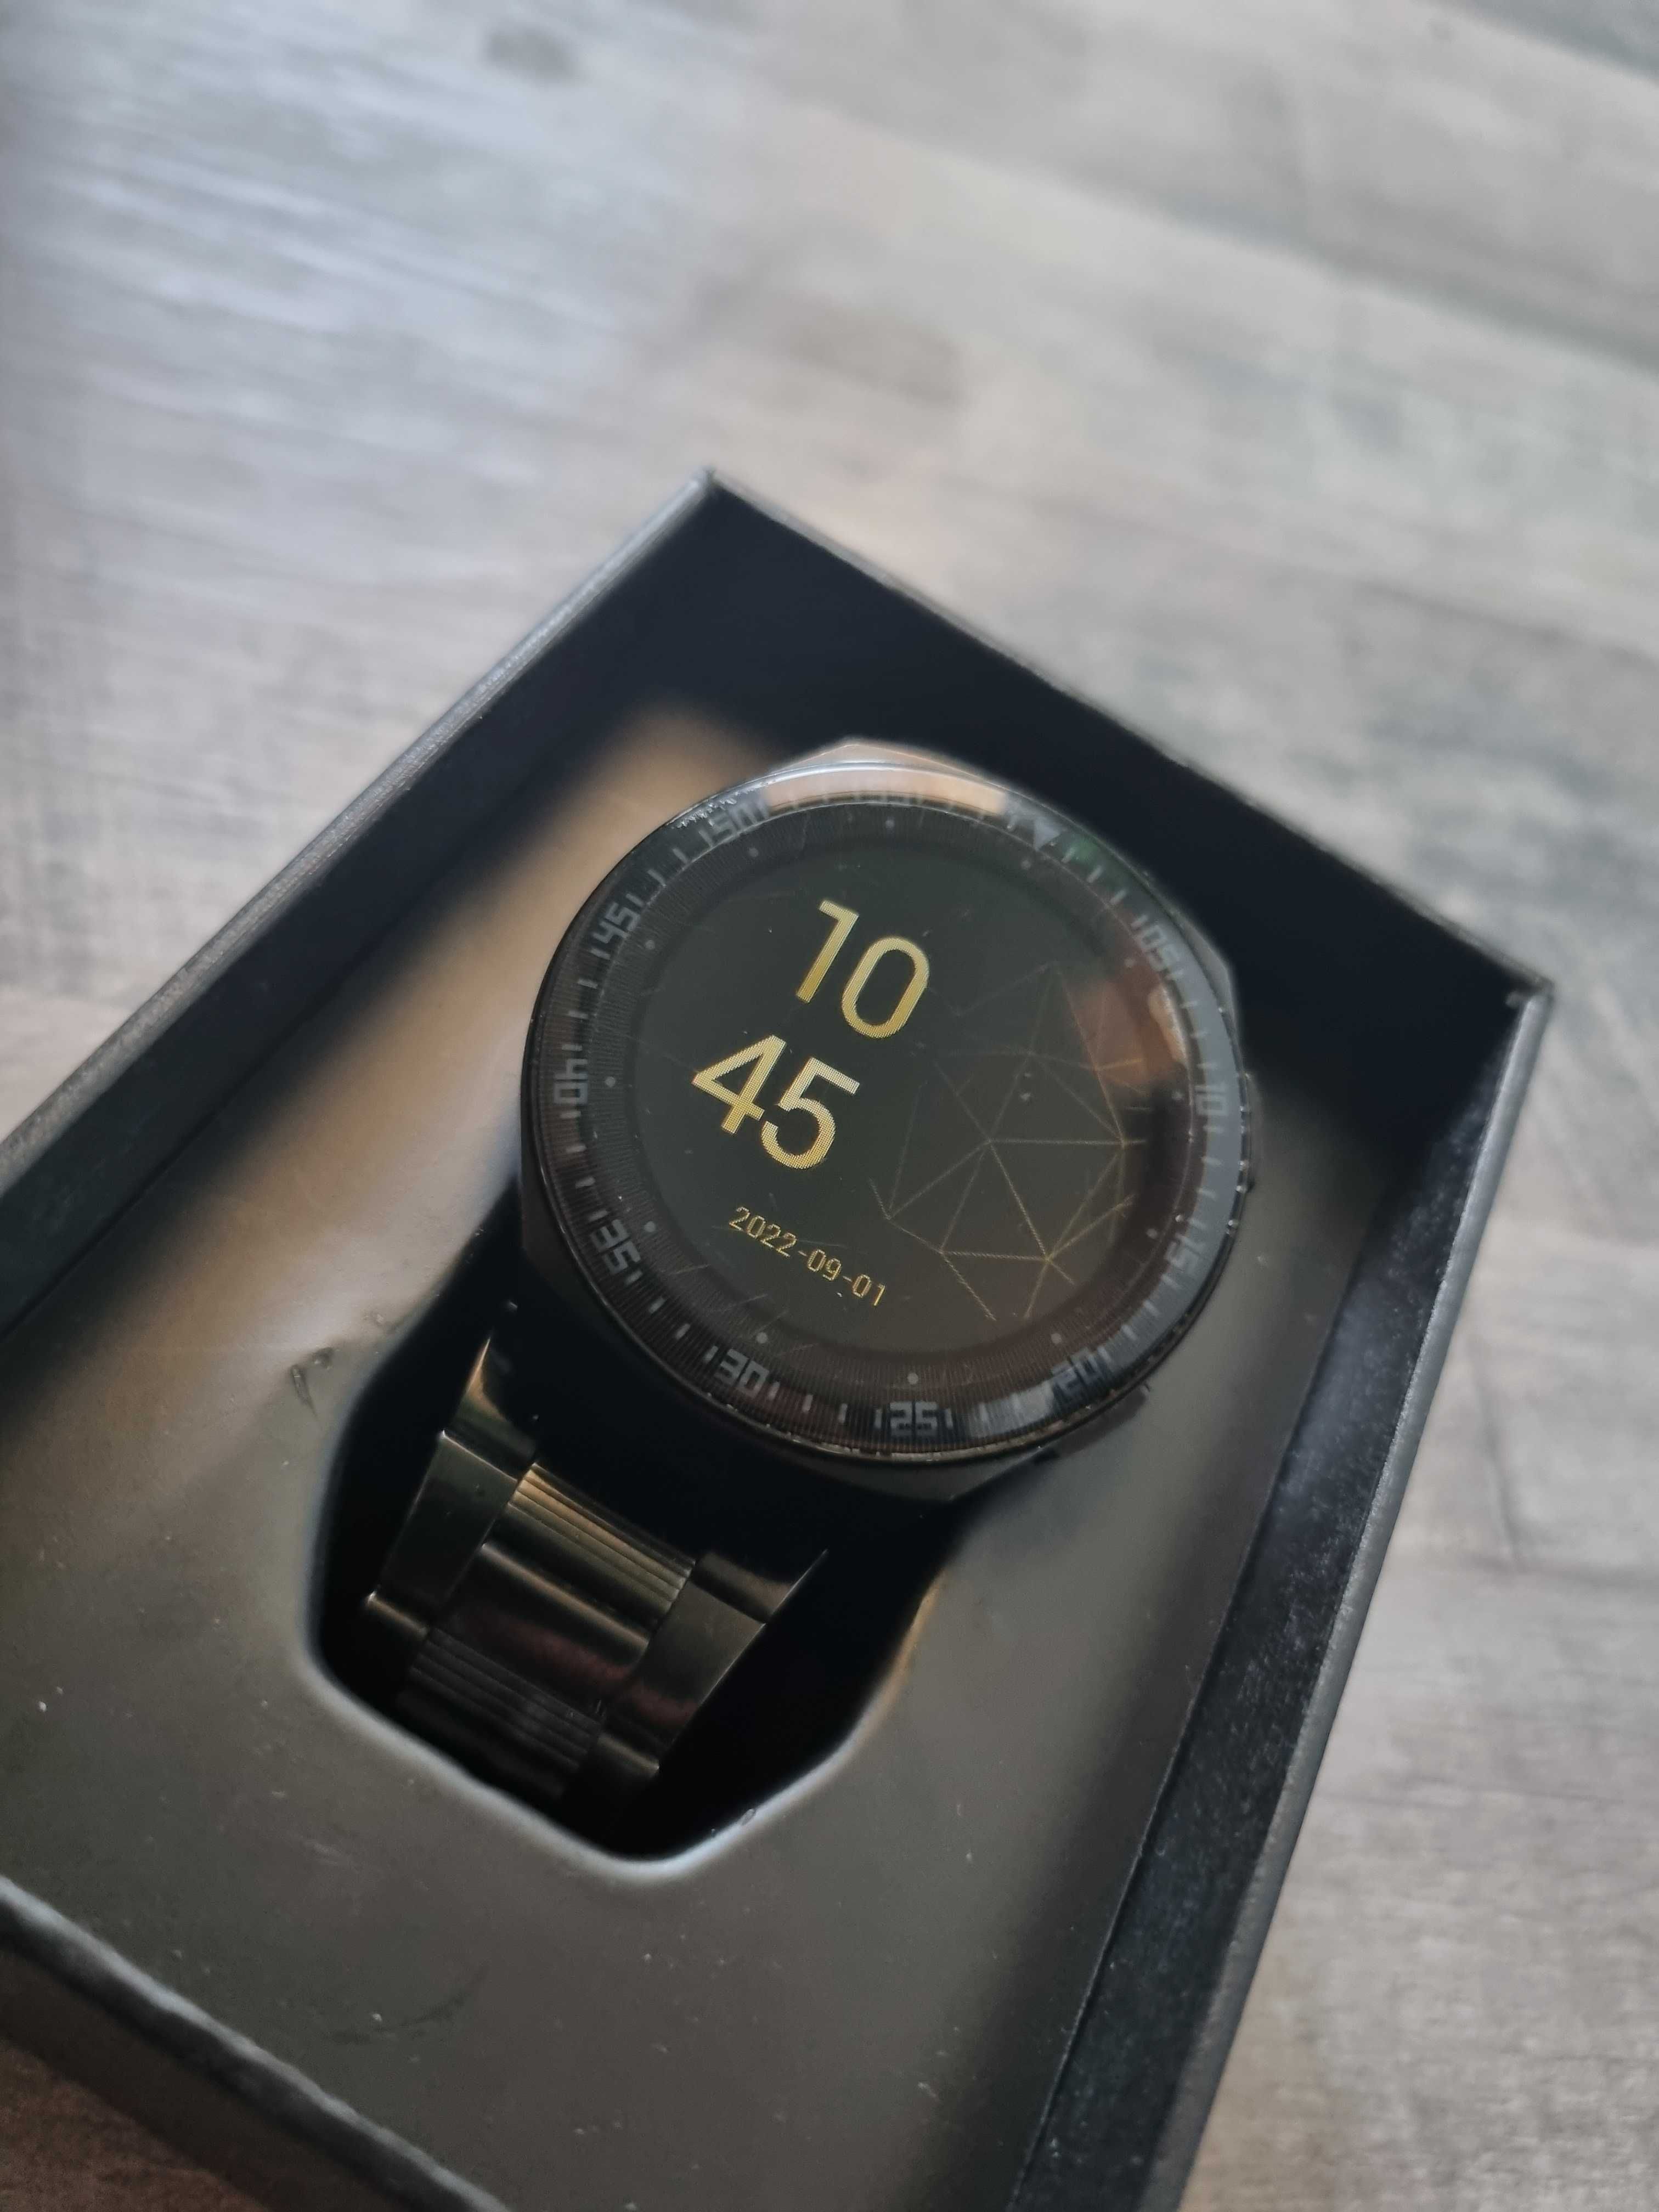 Смарт часовник Smart watch 4 GB памет, 2 седмици батерия